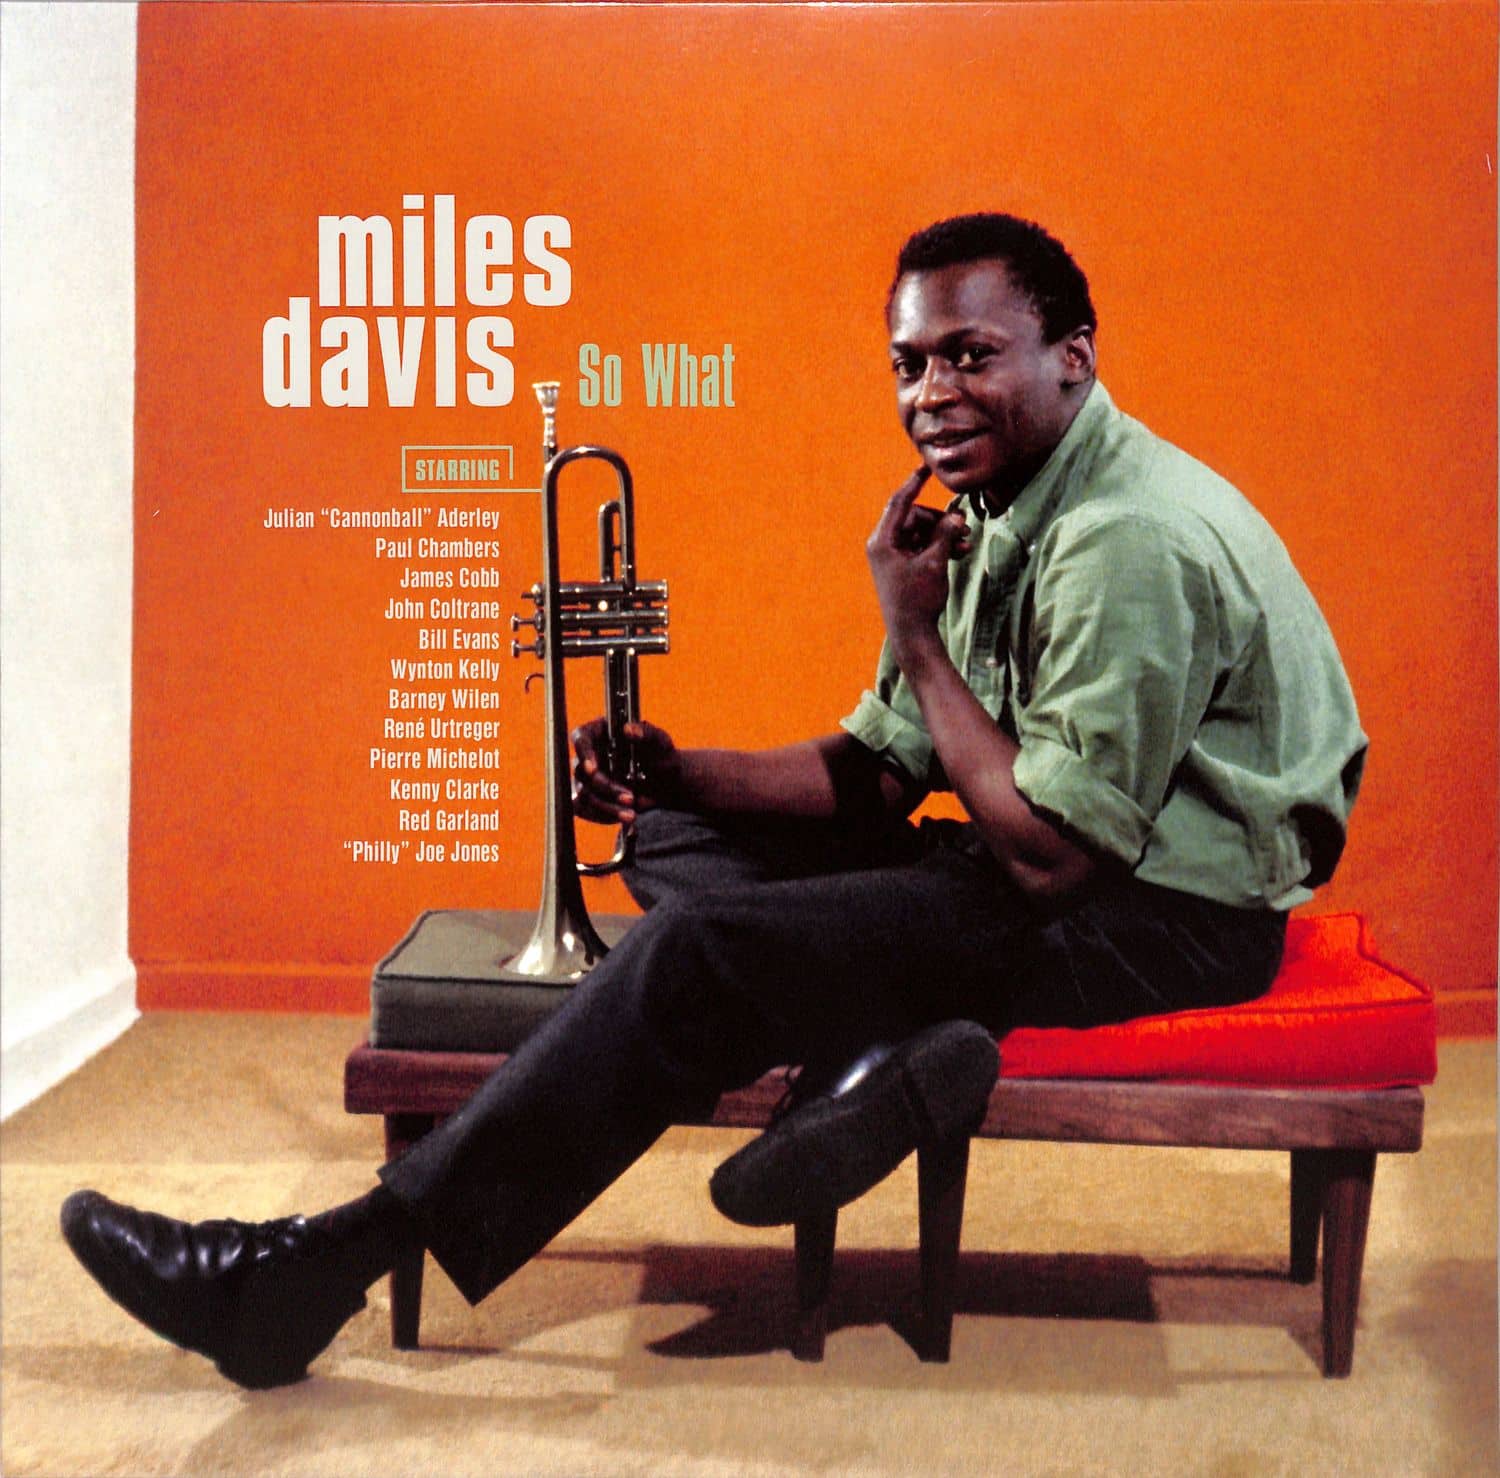 Miles Davis - SO WHAT 